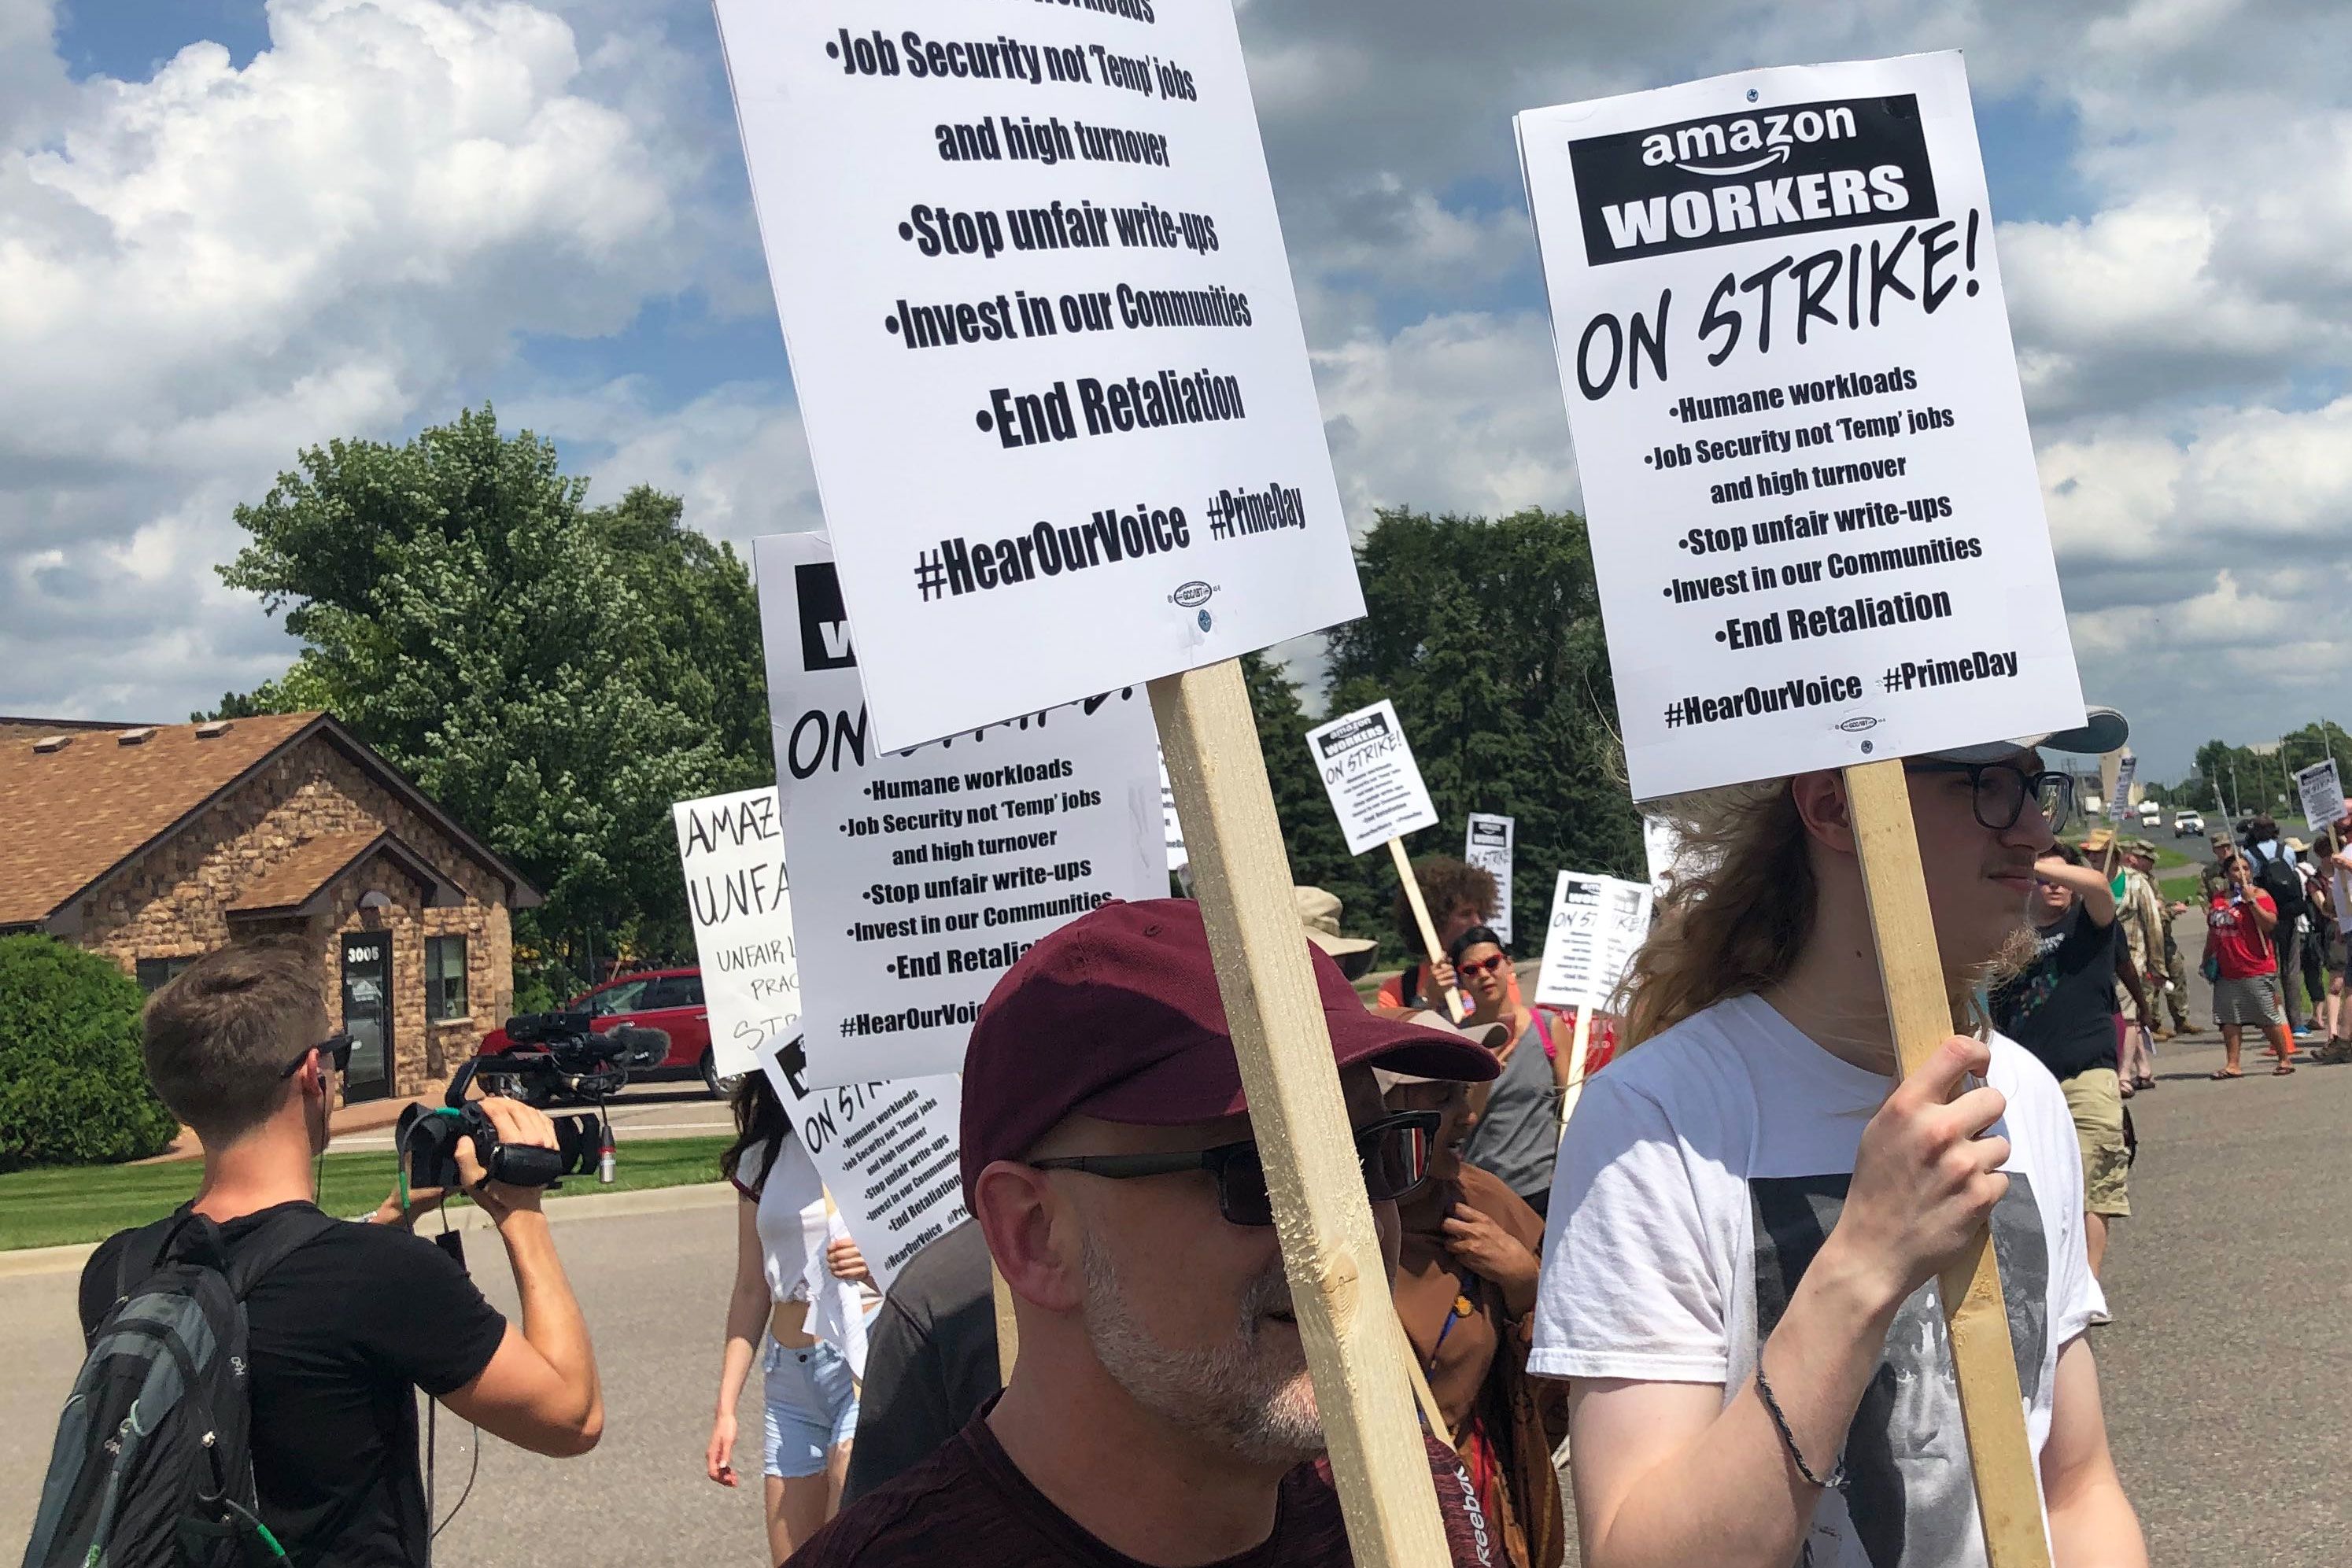 Amazon workers' Prime Day strike begins in Minnesota